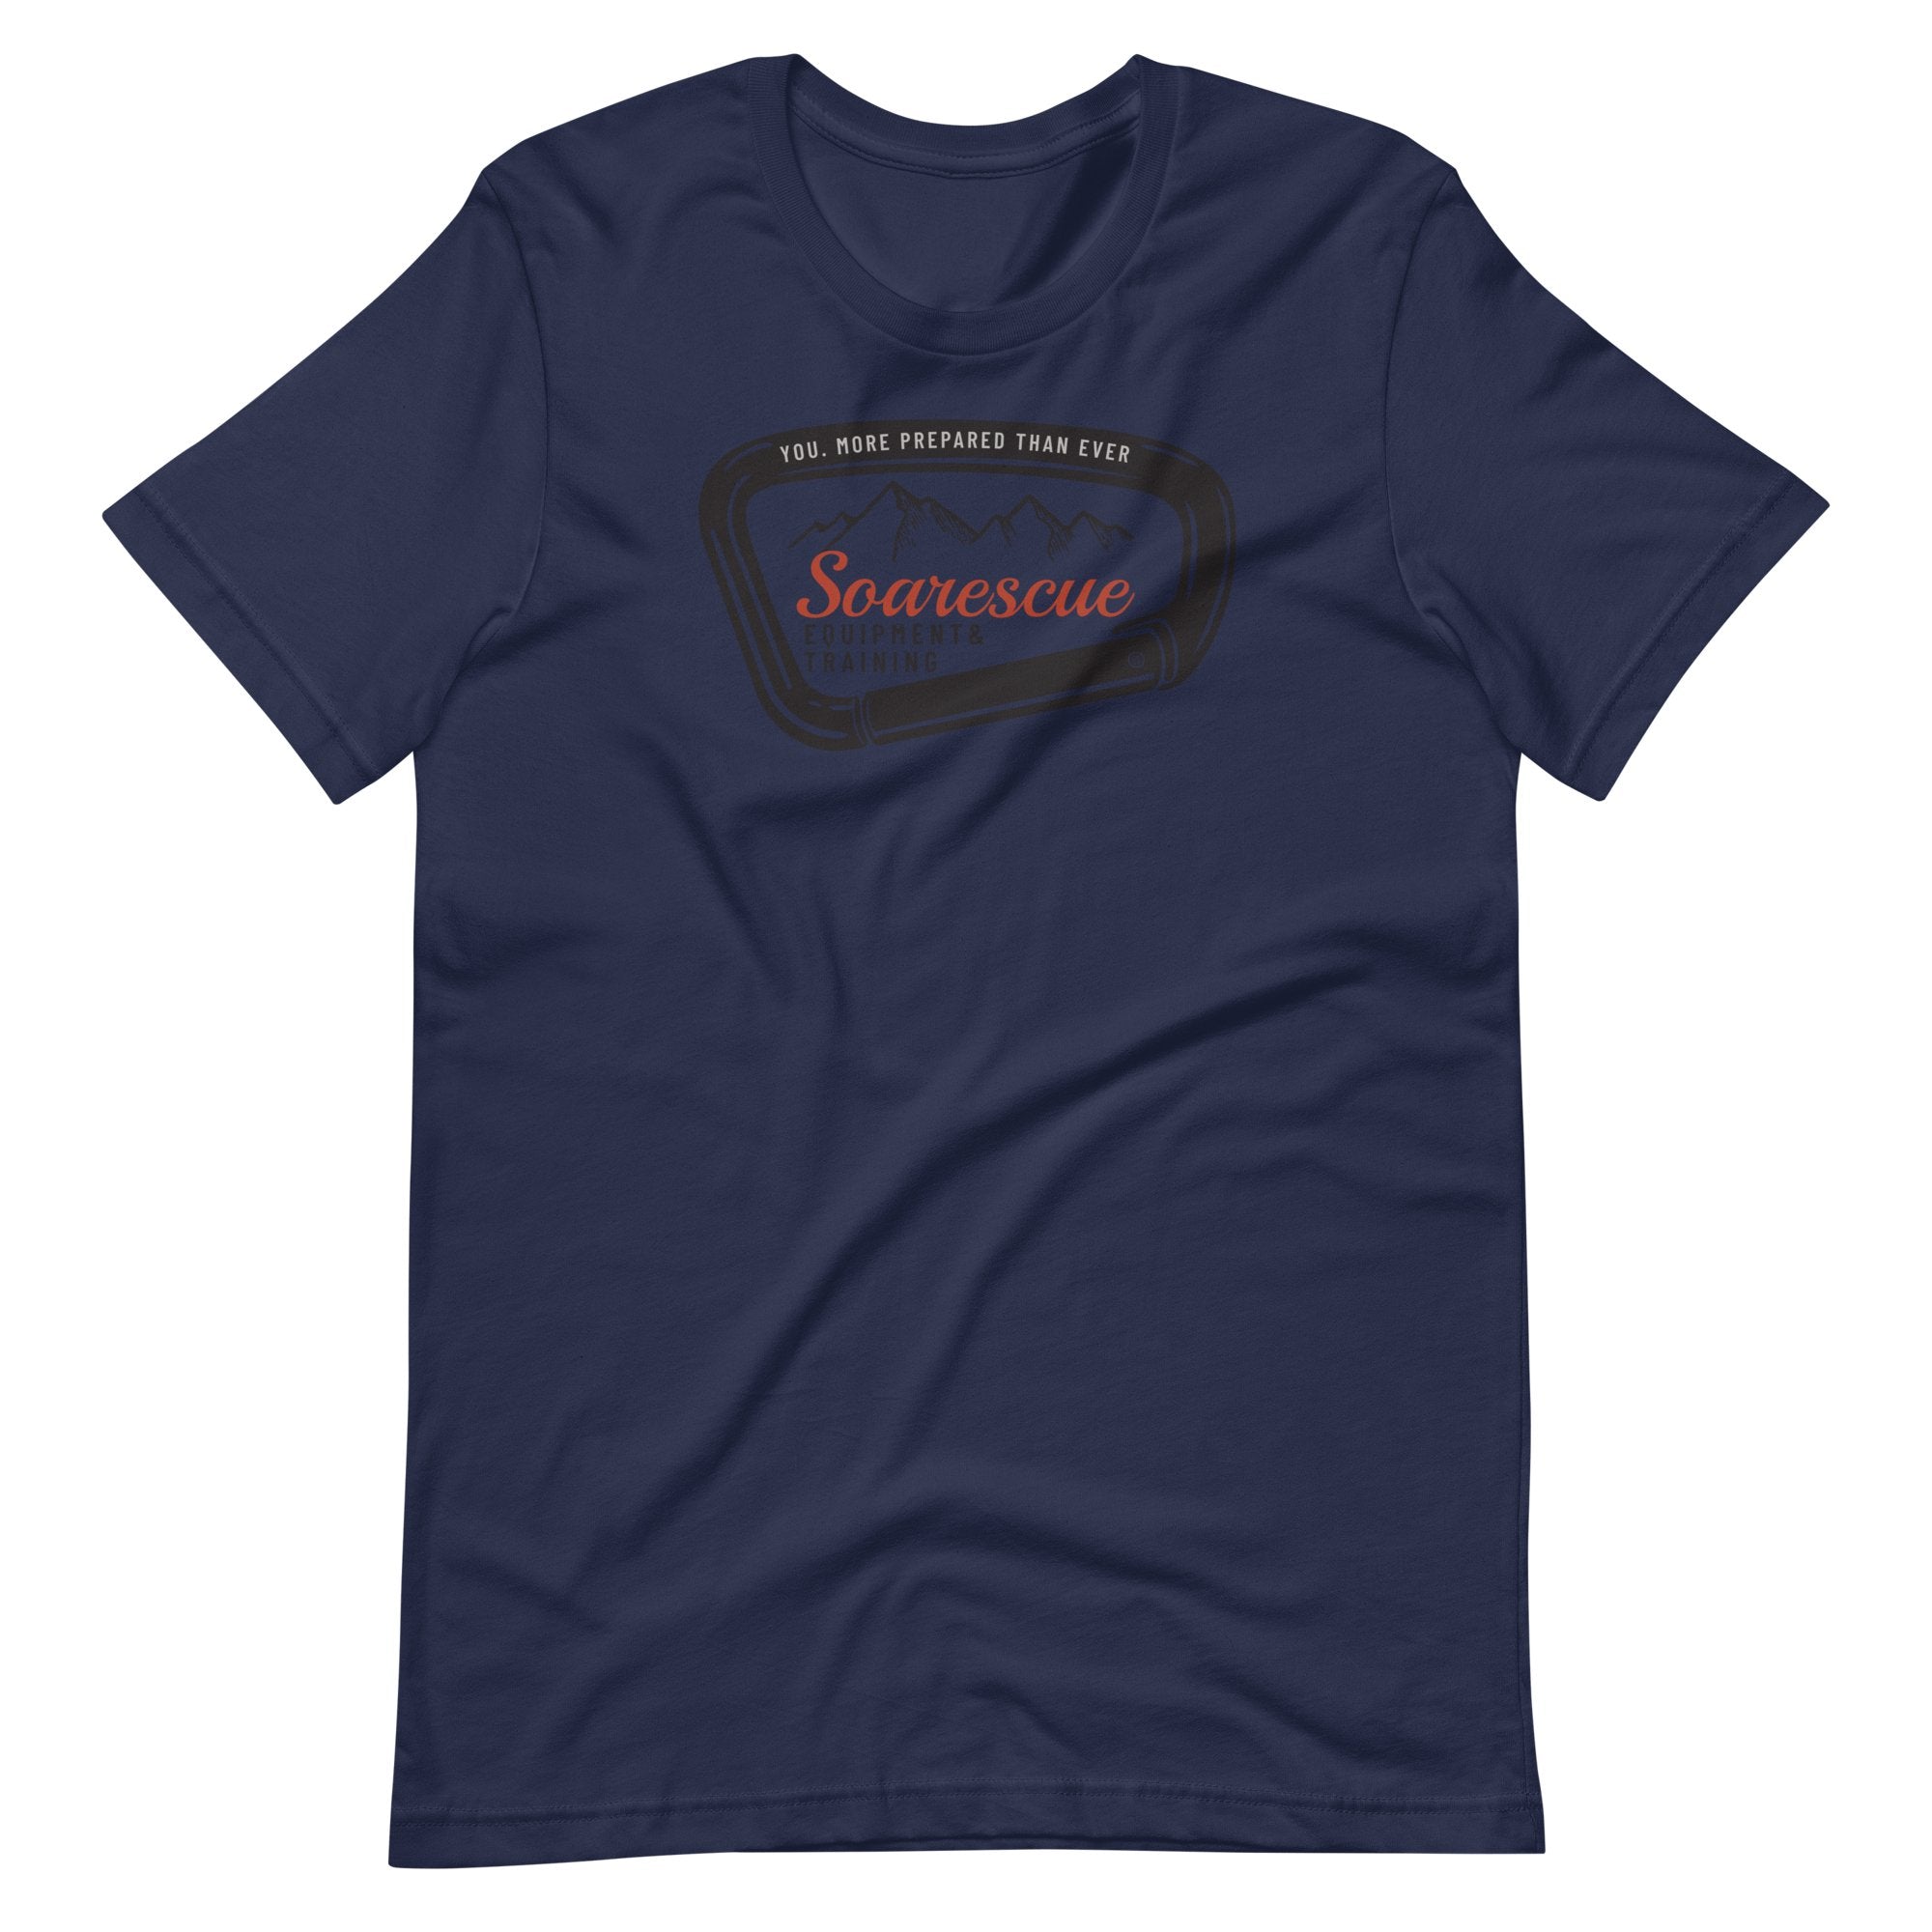 SOARescue - Carabiner Shirt - SOARescue